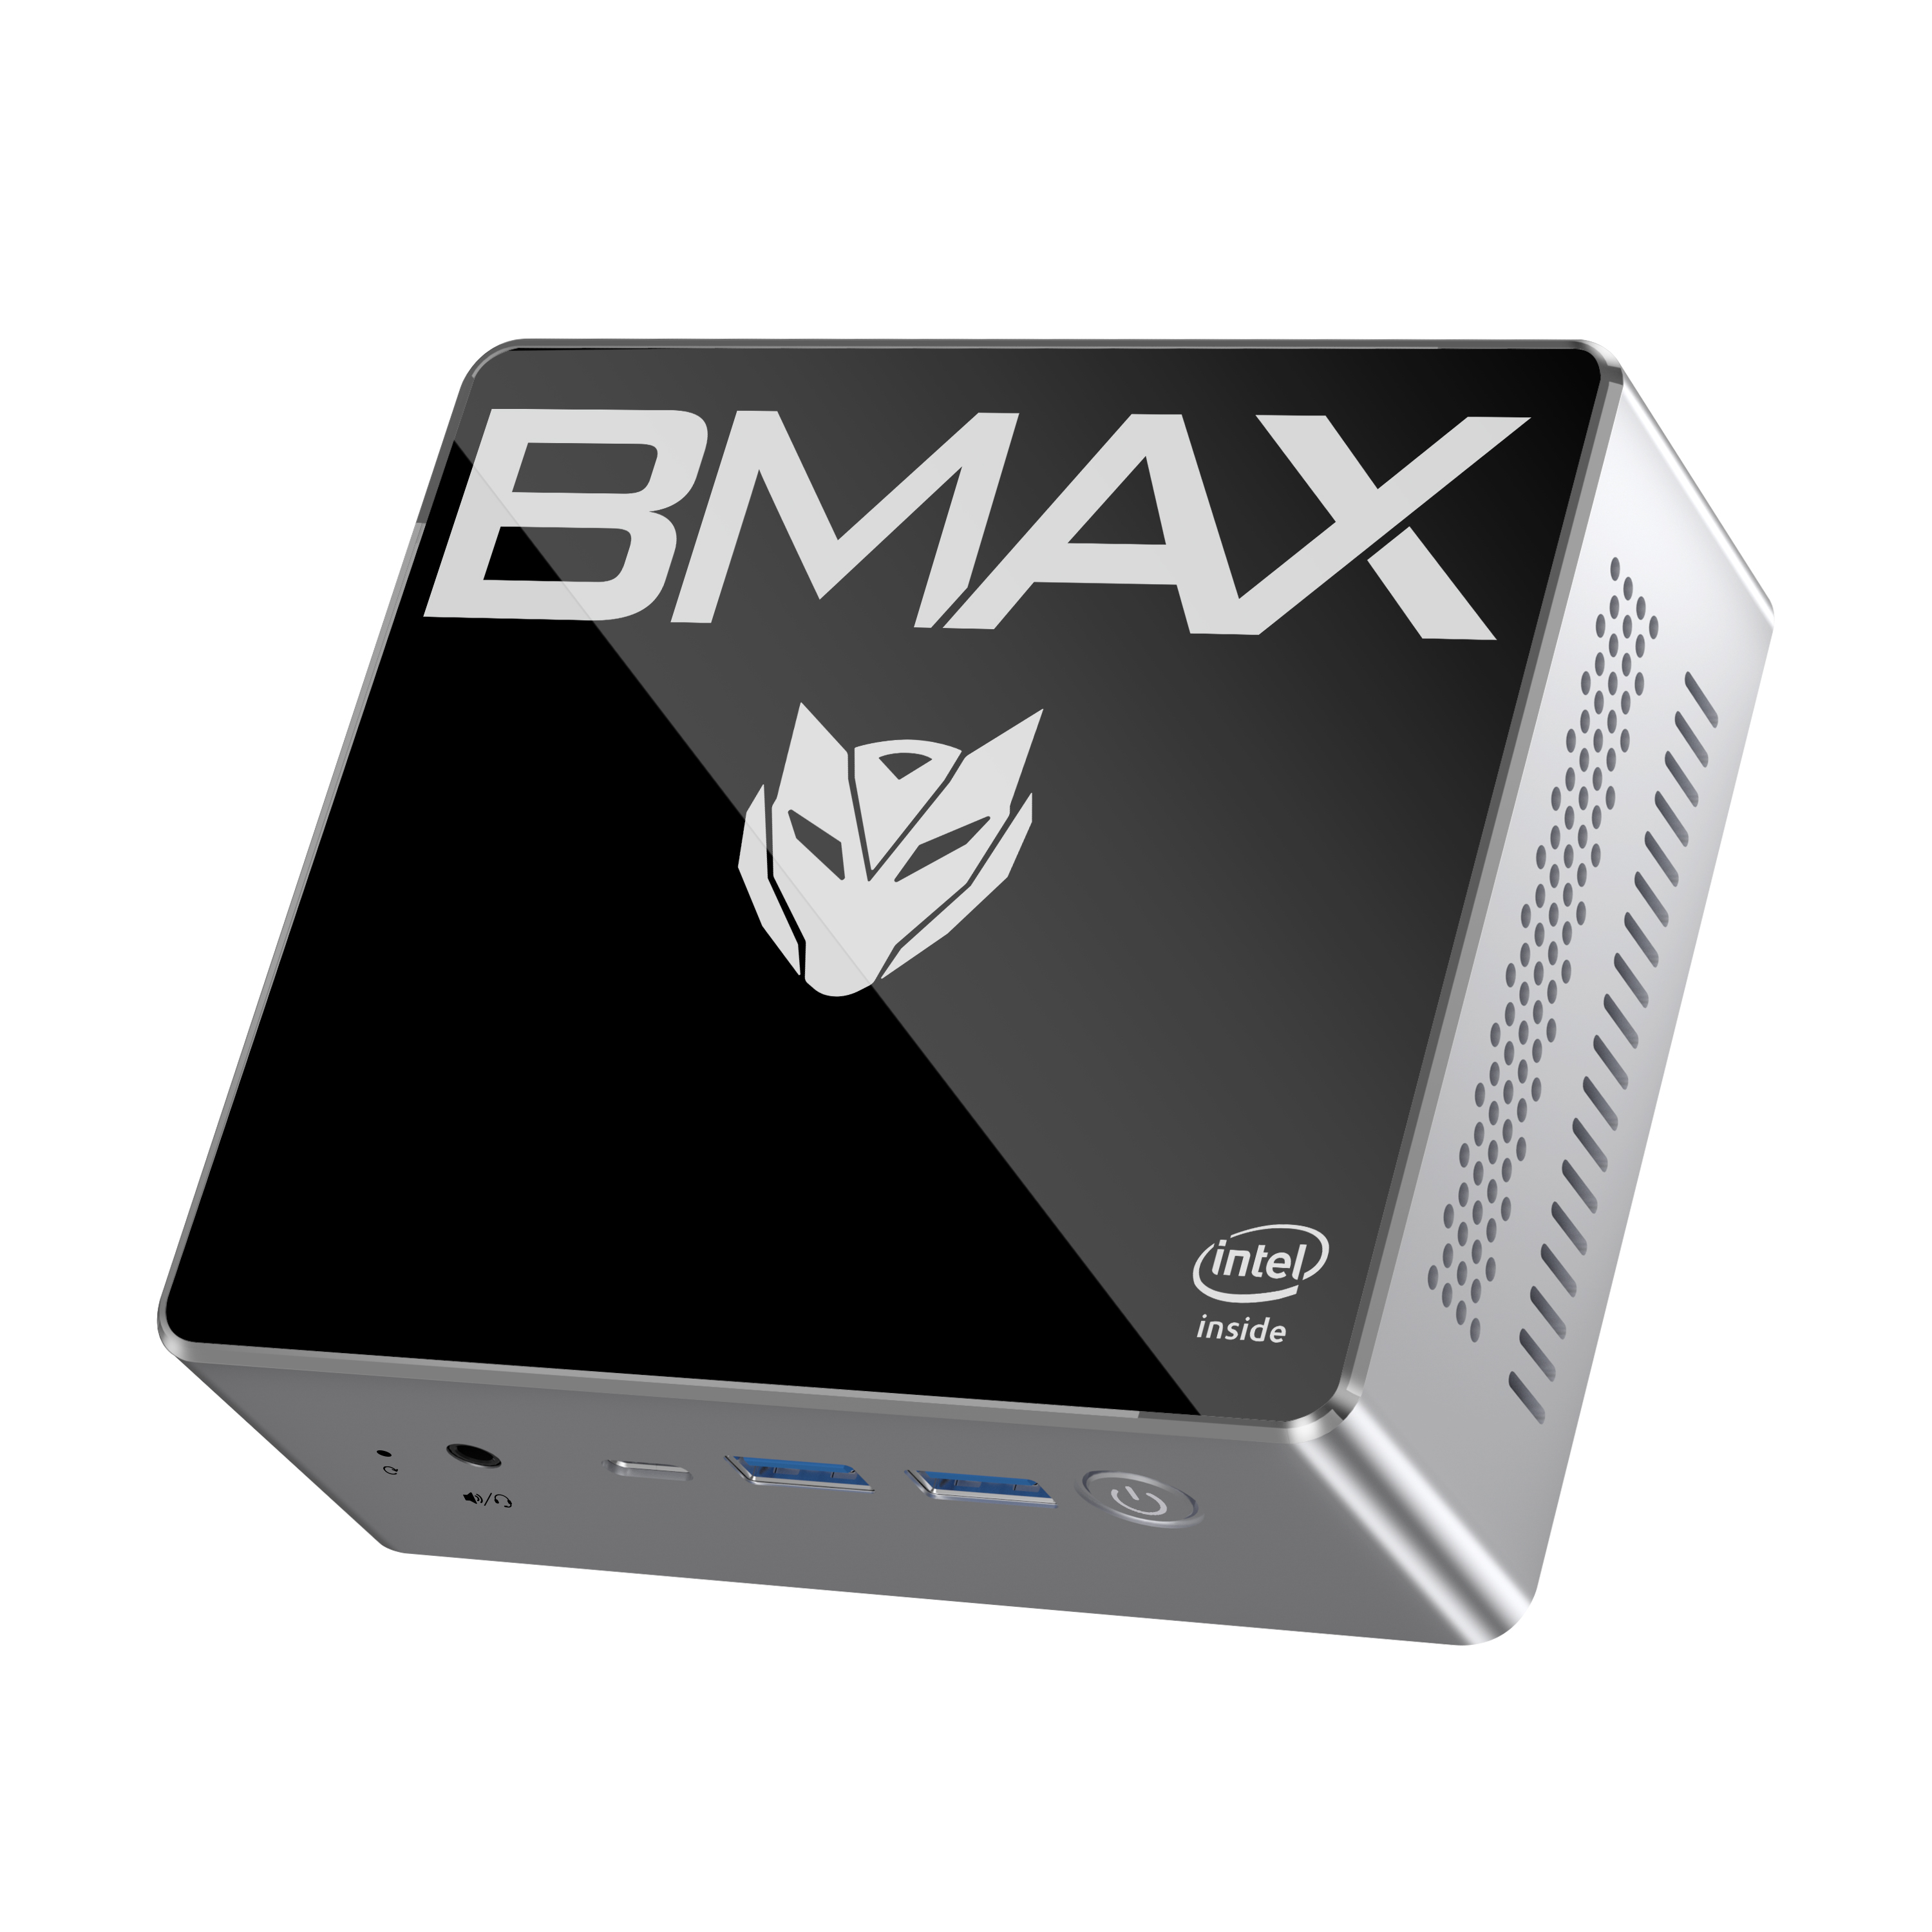 MaxMini B2 Plus - Buy MaxMini B2 Plus Product on BMAX